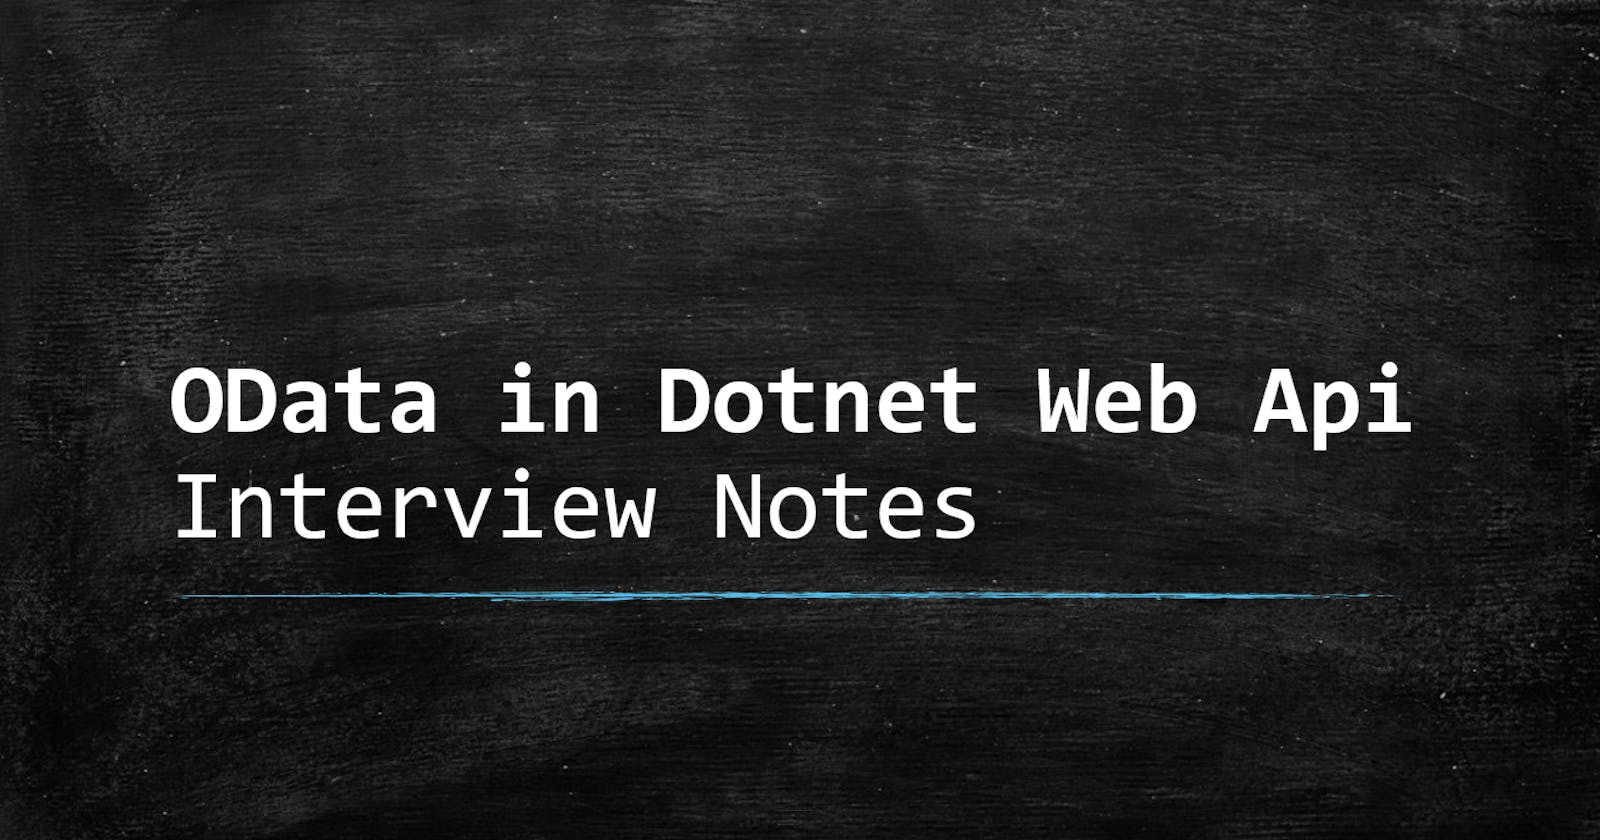 OData in Dotnet Web Api Interview Notes